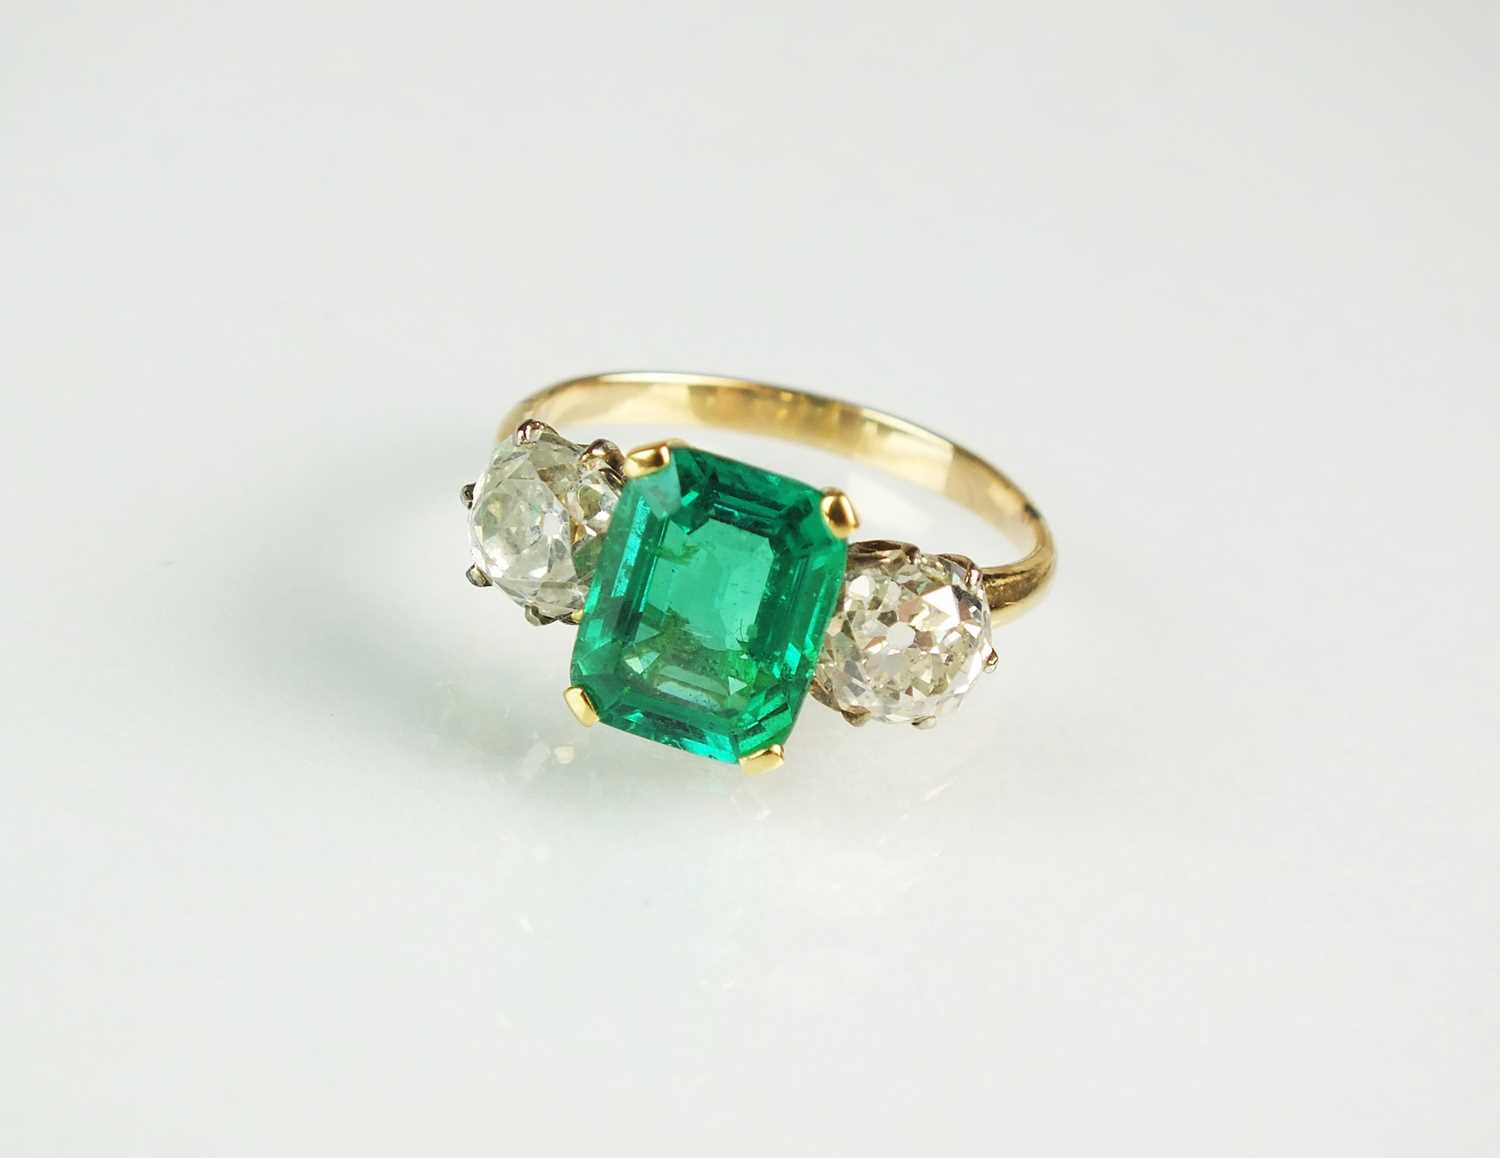 159 - A three stone emerald and diamond ring